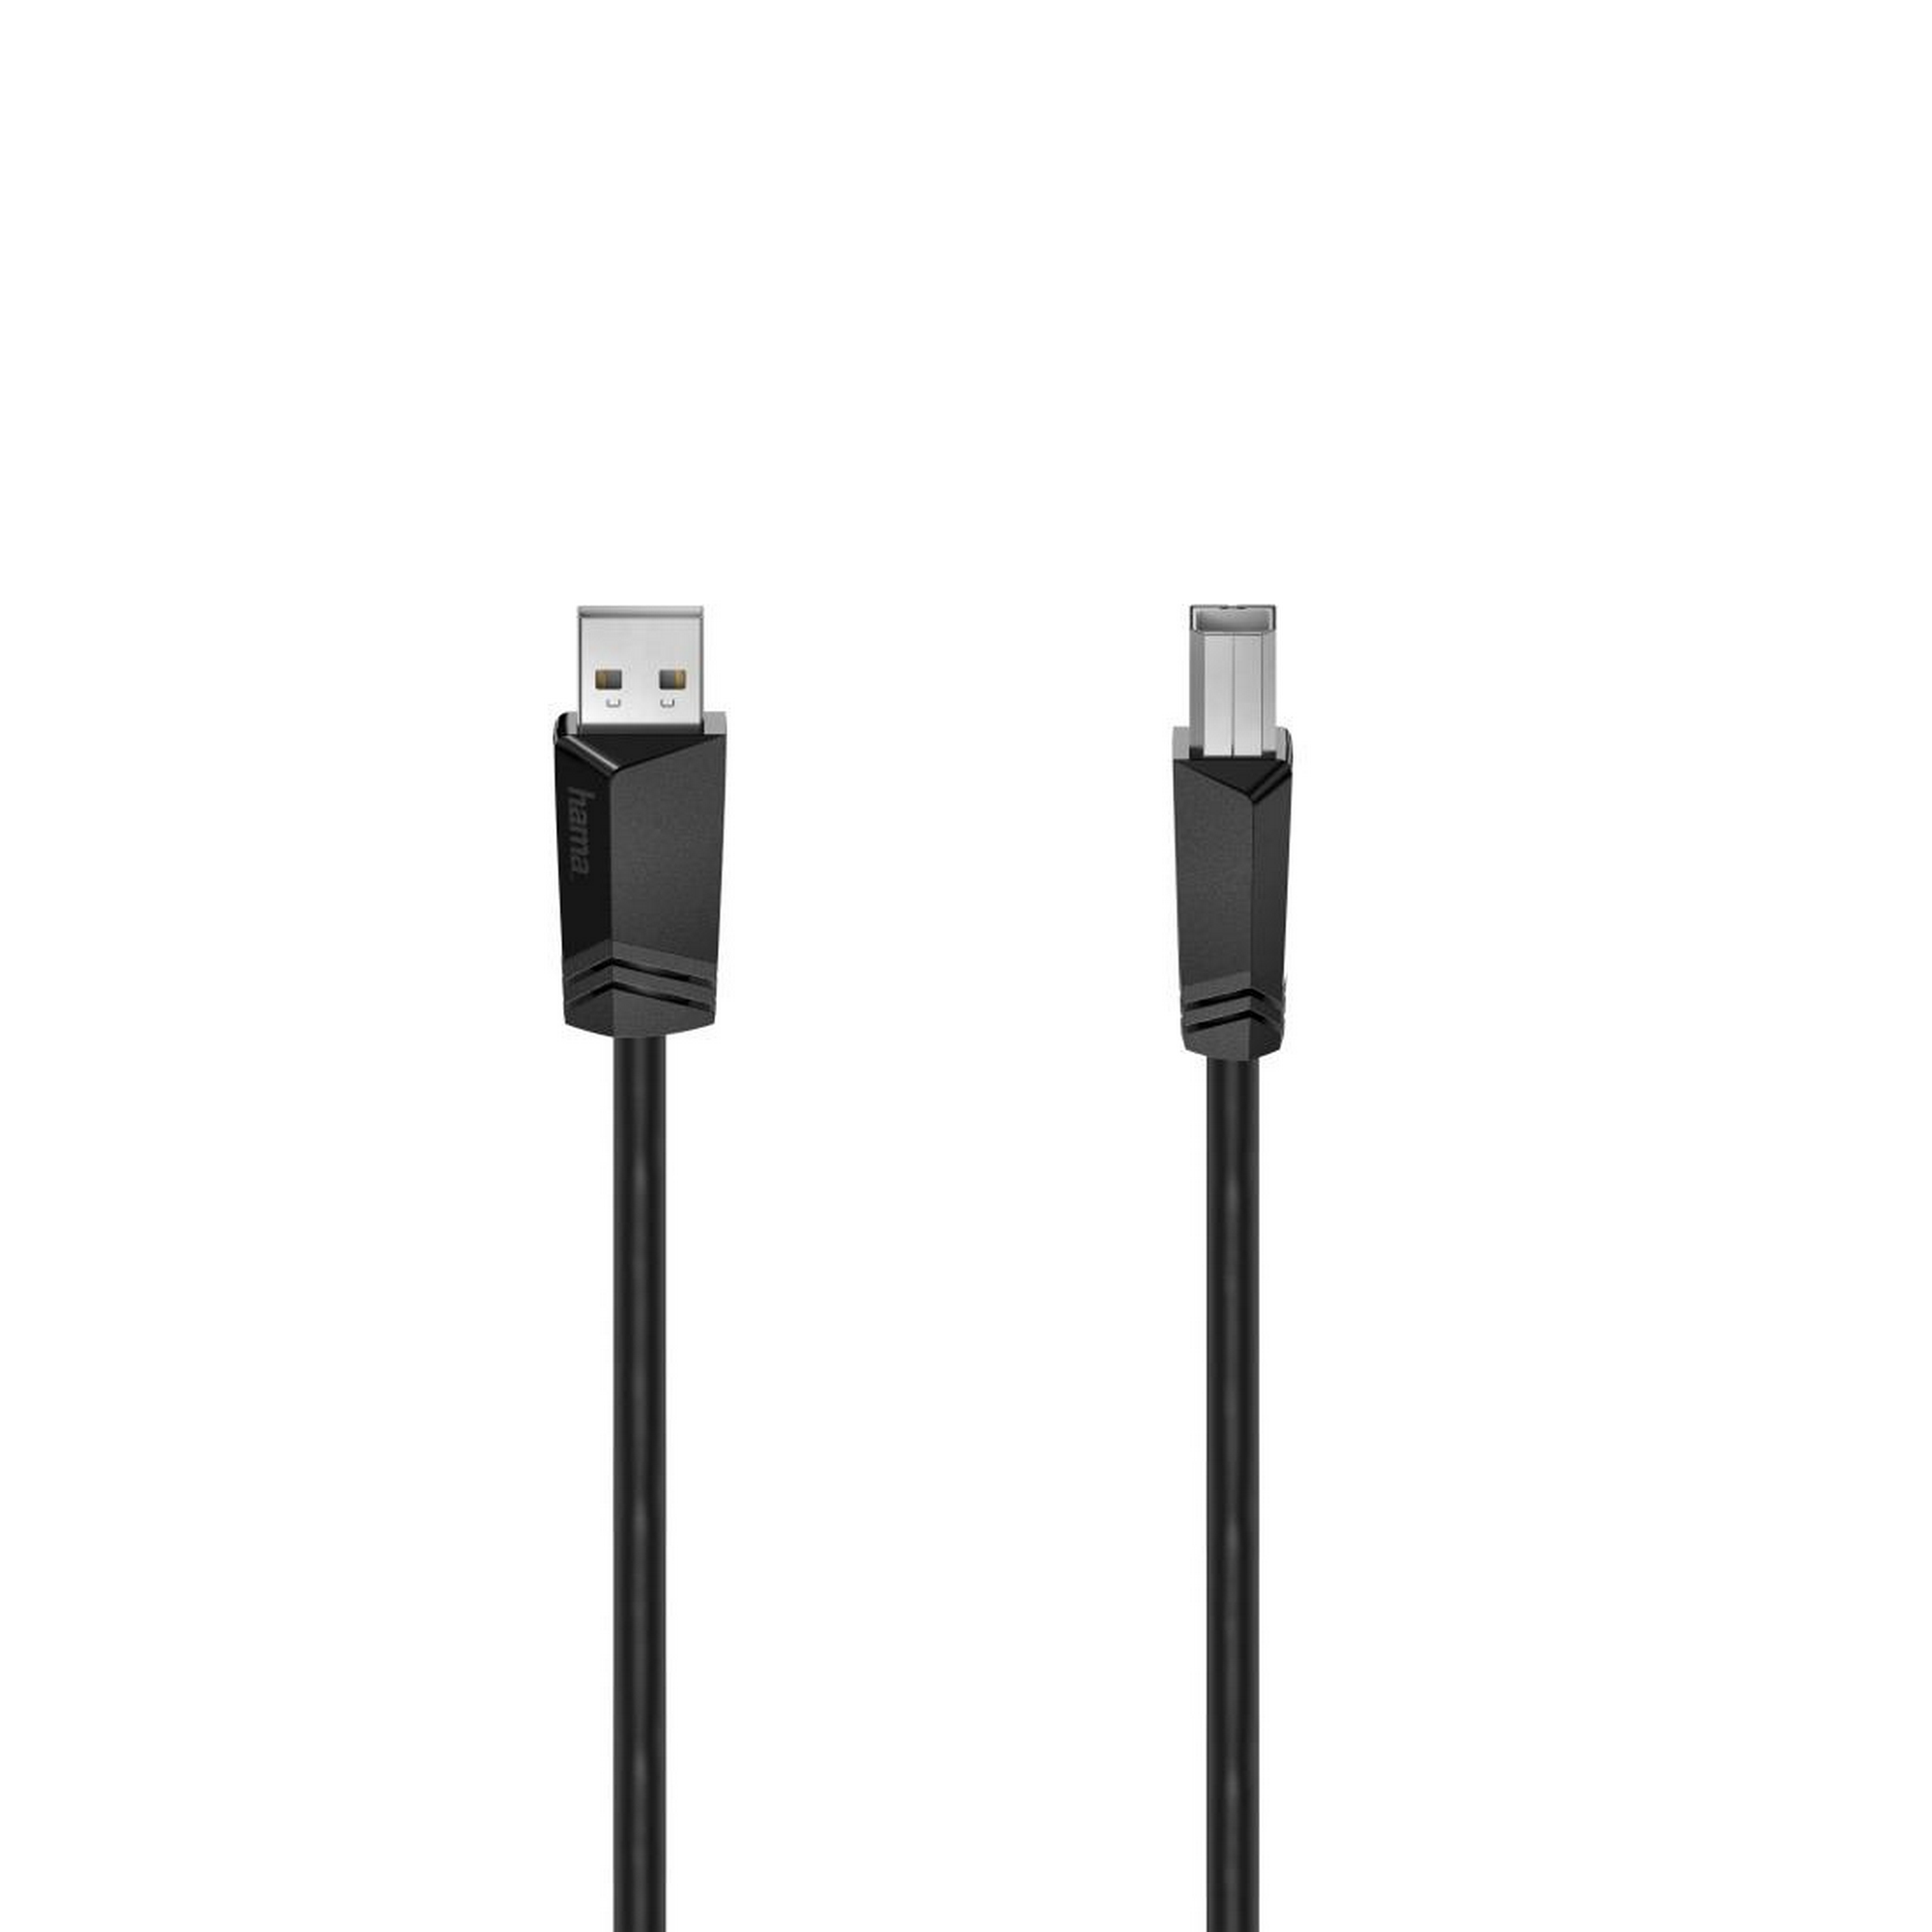 USB-Datenkabel, USB 2.0 schwarz 1,50 m + product picture